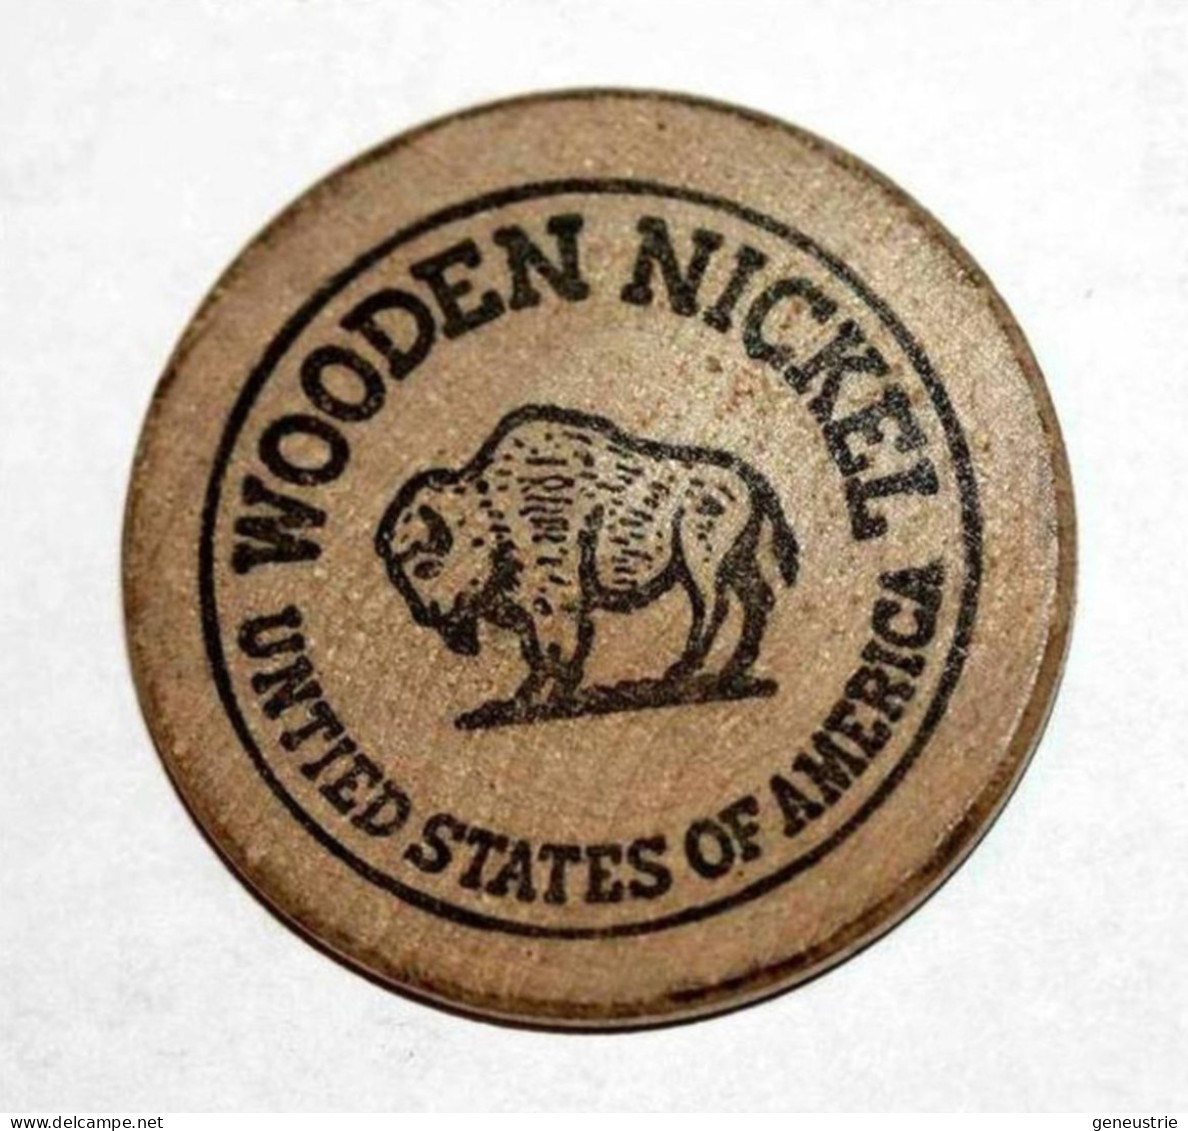 Wooden Token - Wooden Nickel - Jeton Bois Bison Monnaie Nécessité - Appreciation Dinner 1969 - Etats-Unis - Monetari/ Di Necessità